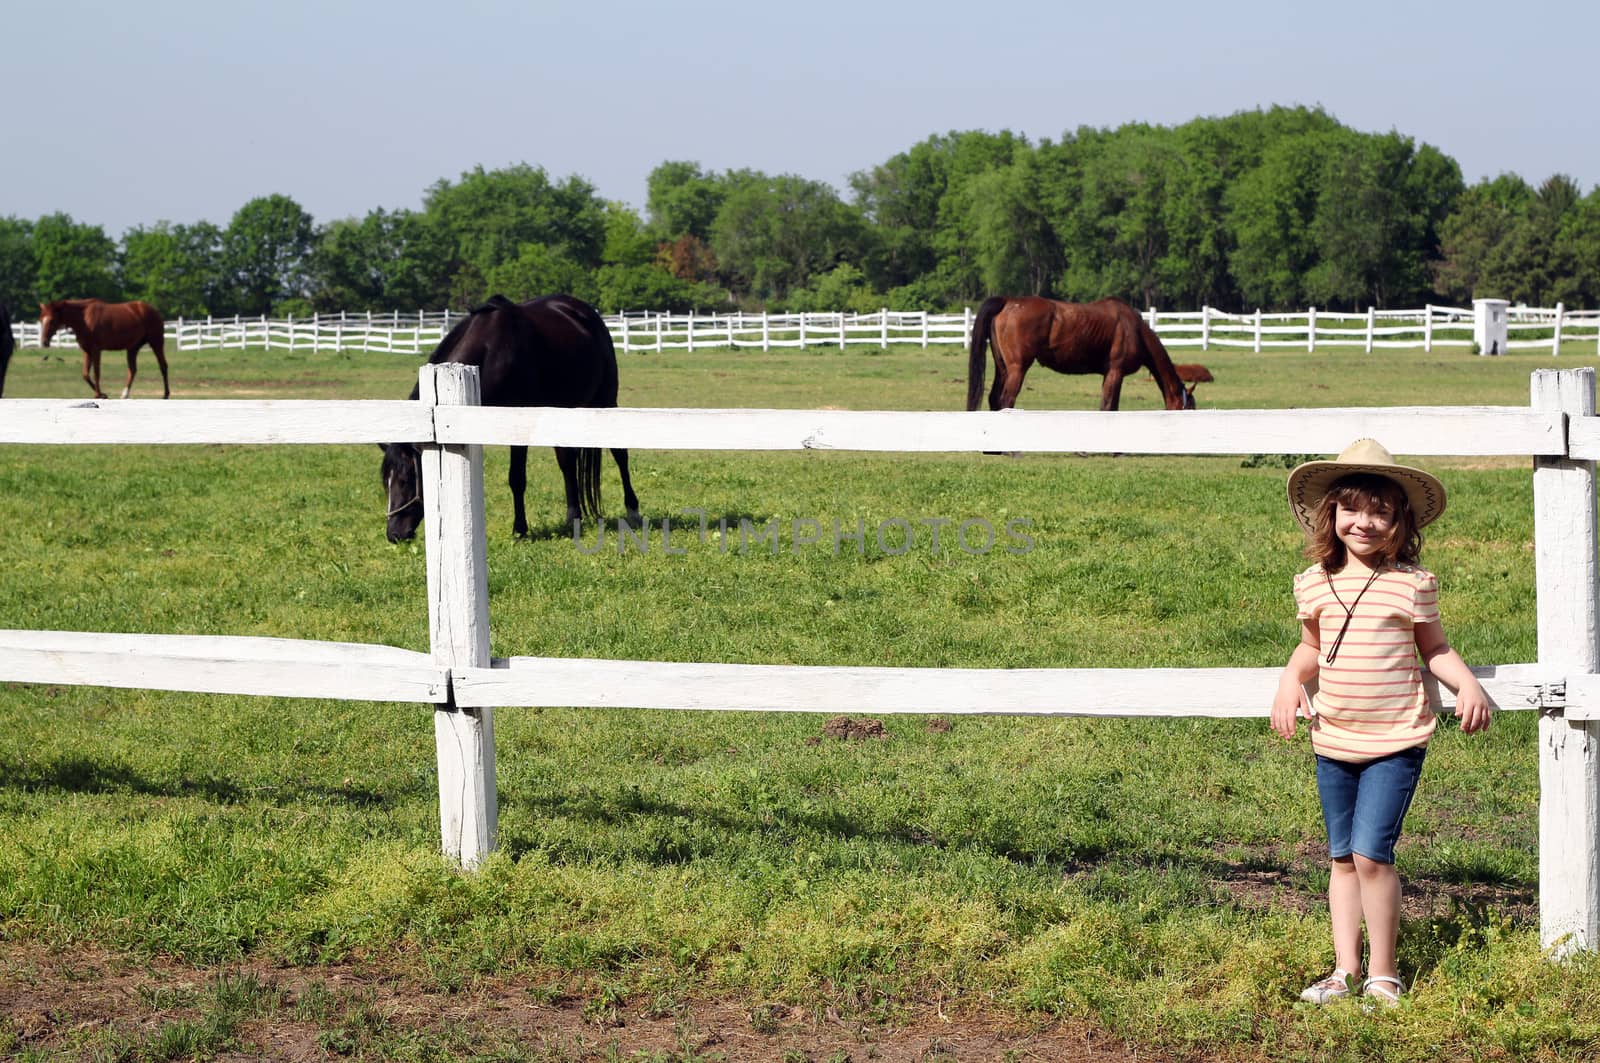 little girl with horses on farm by goce